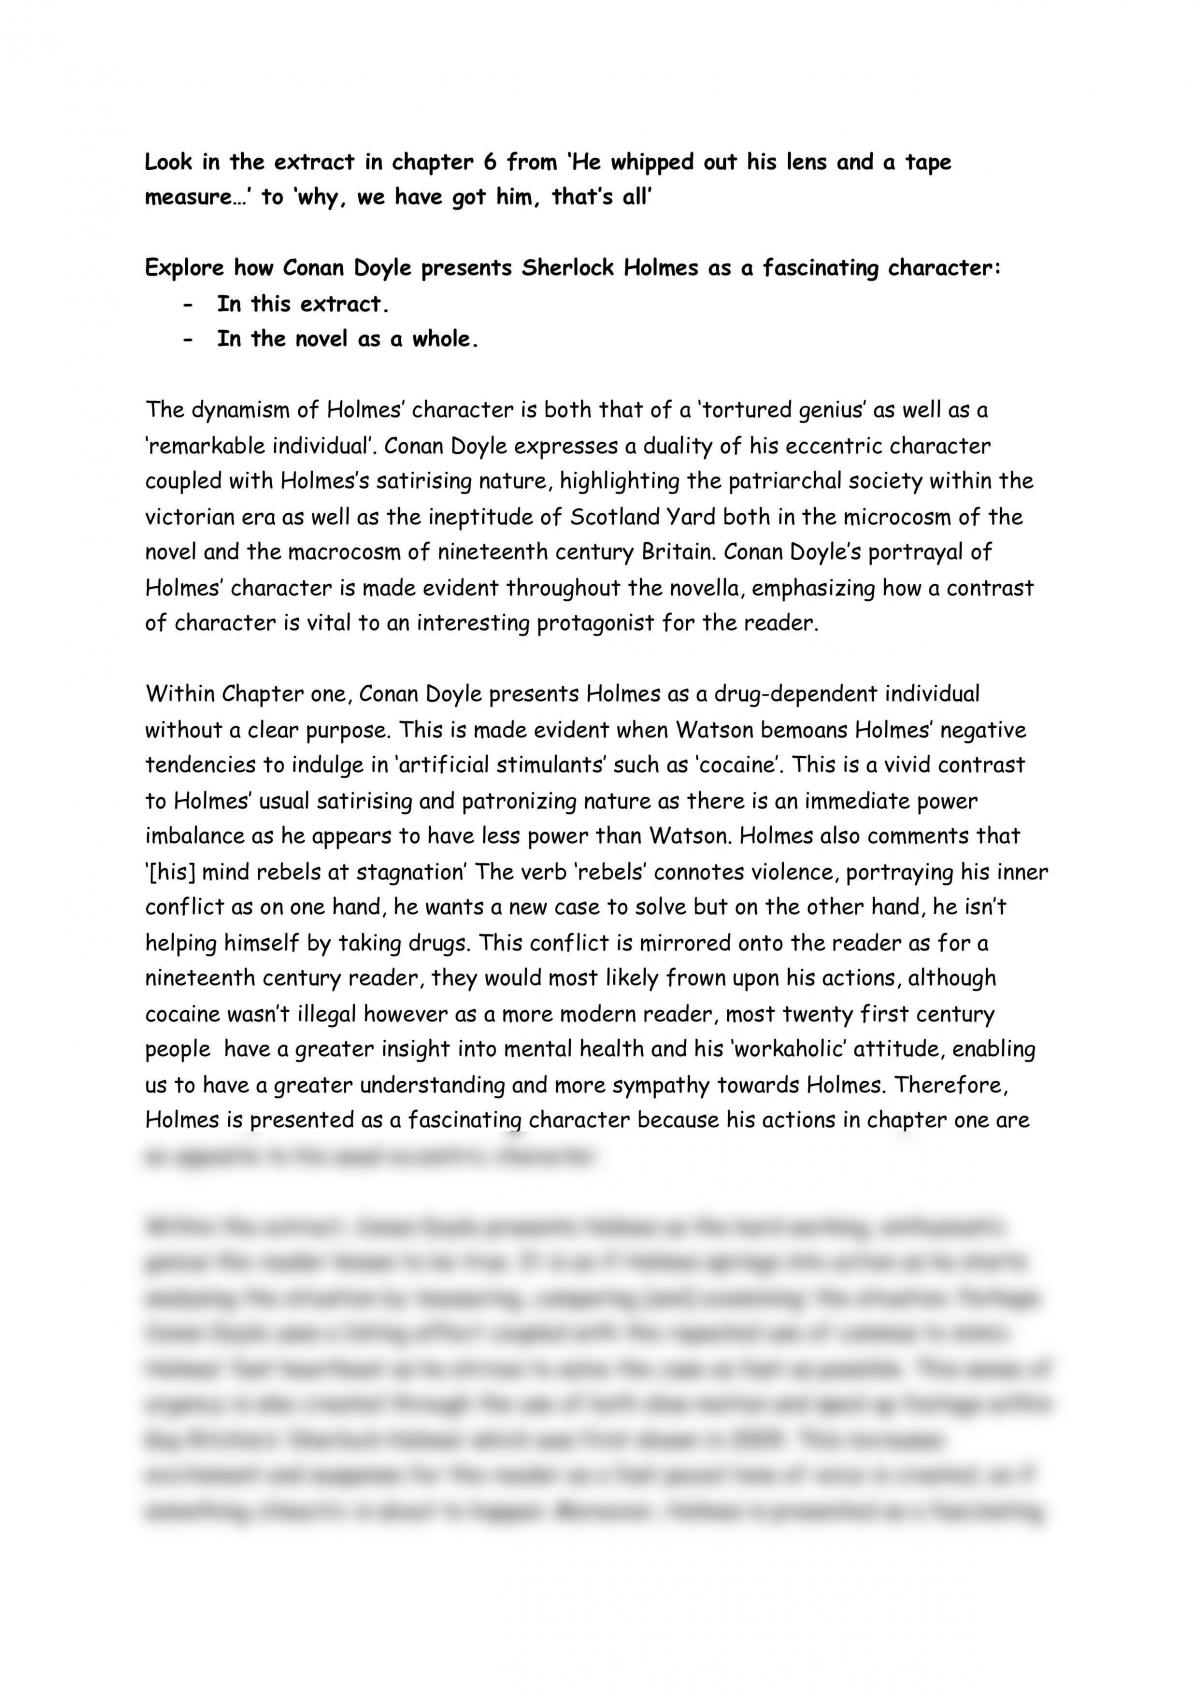 character analysis essay on sherlock holmes